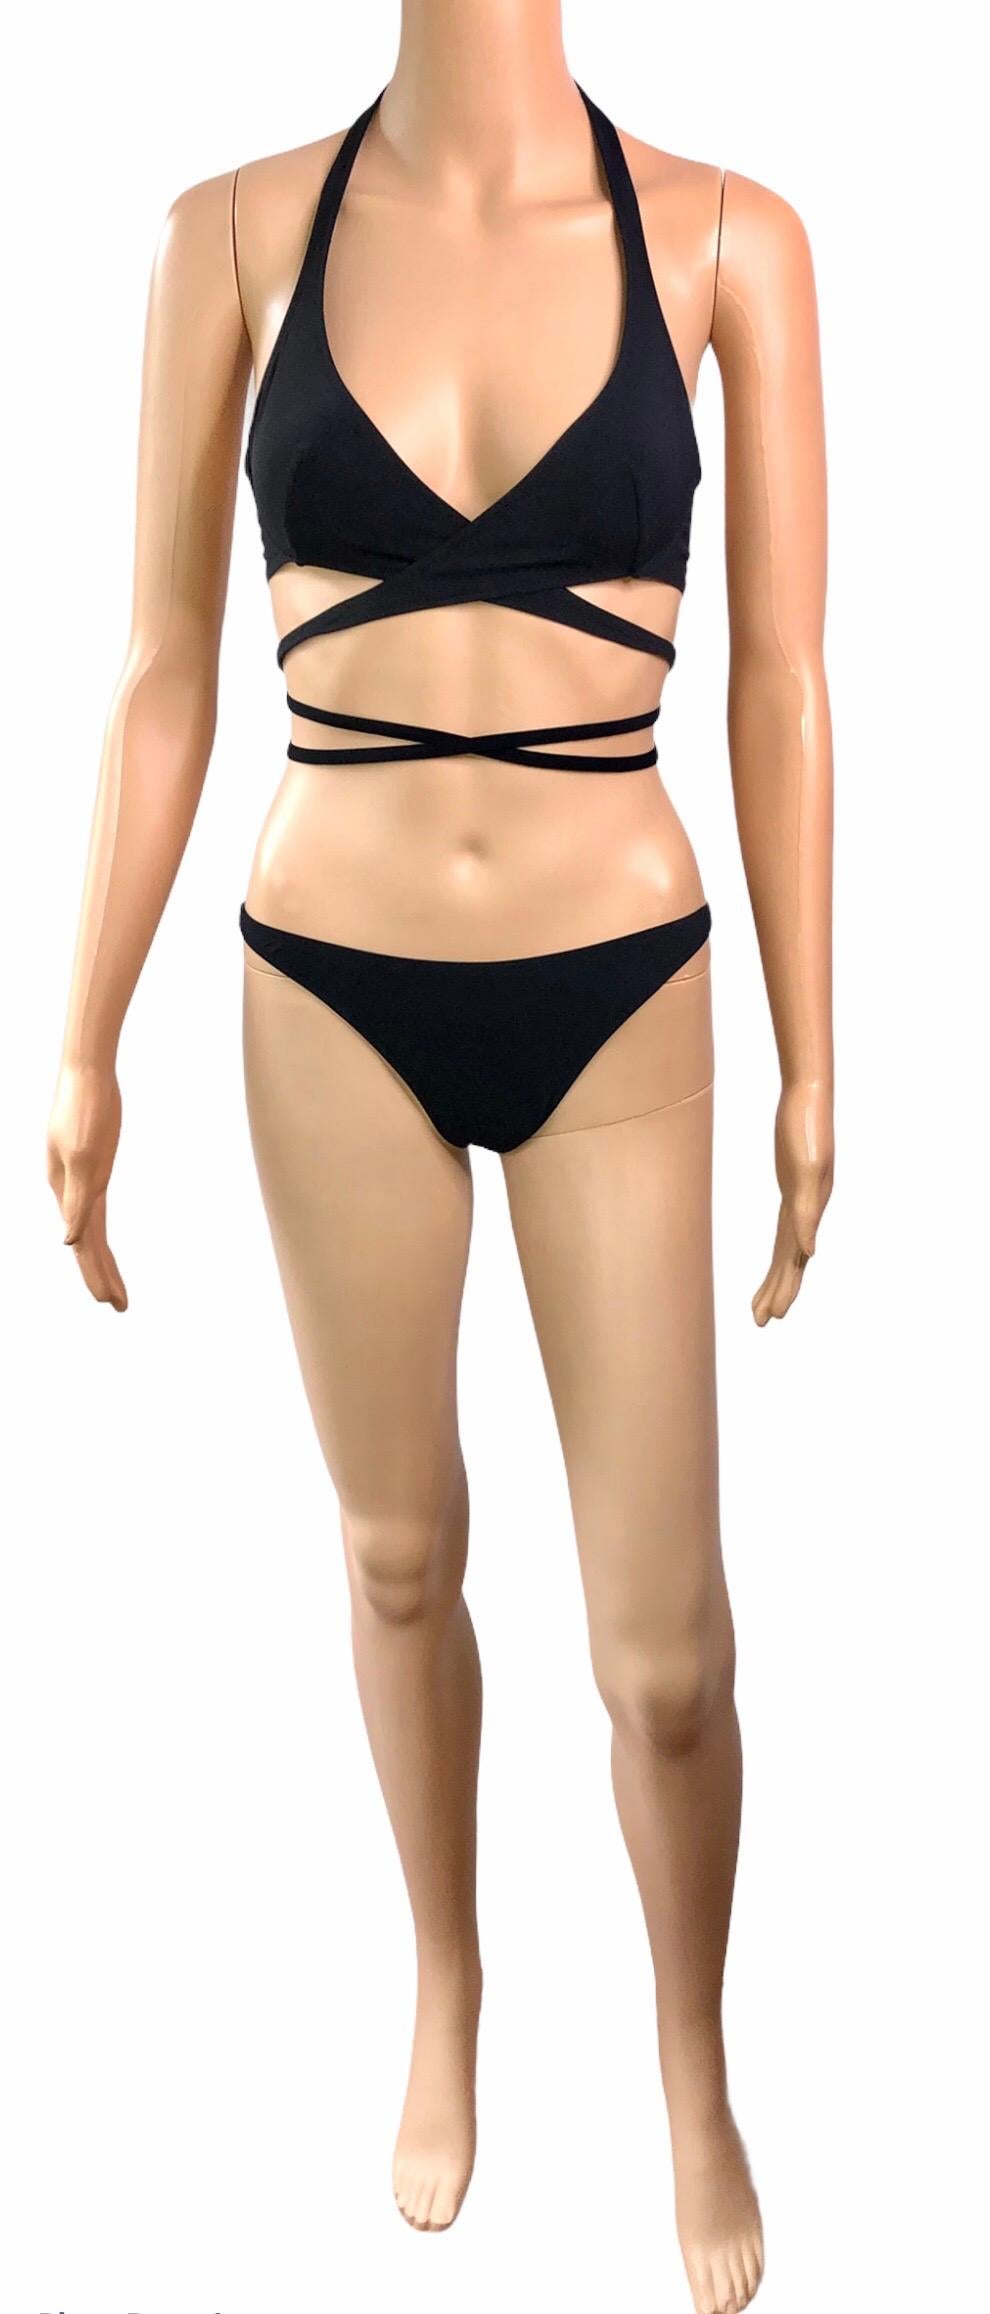 Dolce & Gabbana S/S 2006 Wrap Tie Up Black Bikini Swimwear Swimsuit 2 Piece Set In Good Condition For Sale In Naples, FL